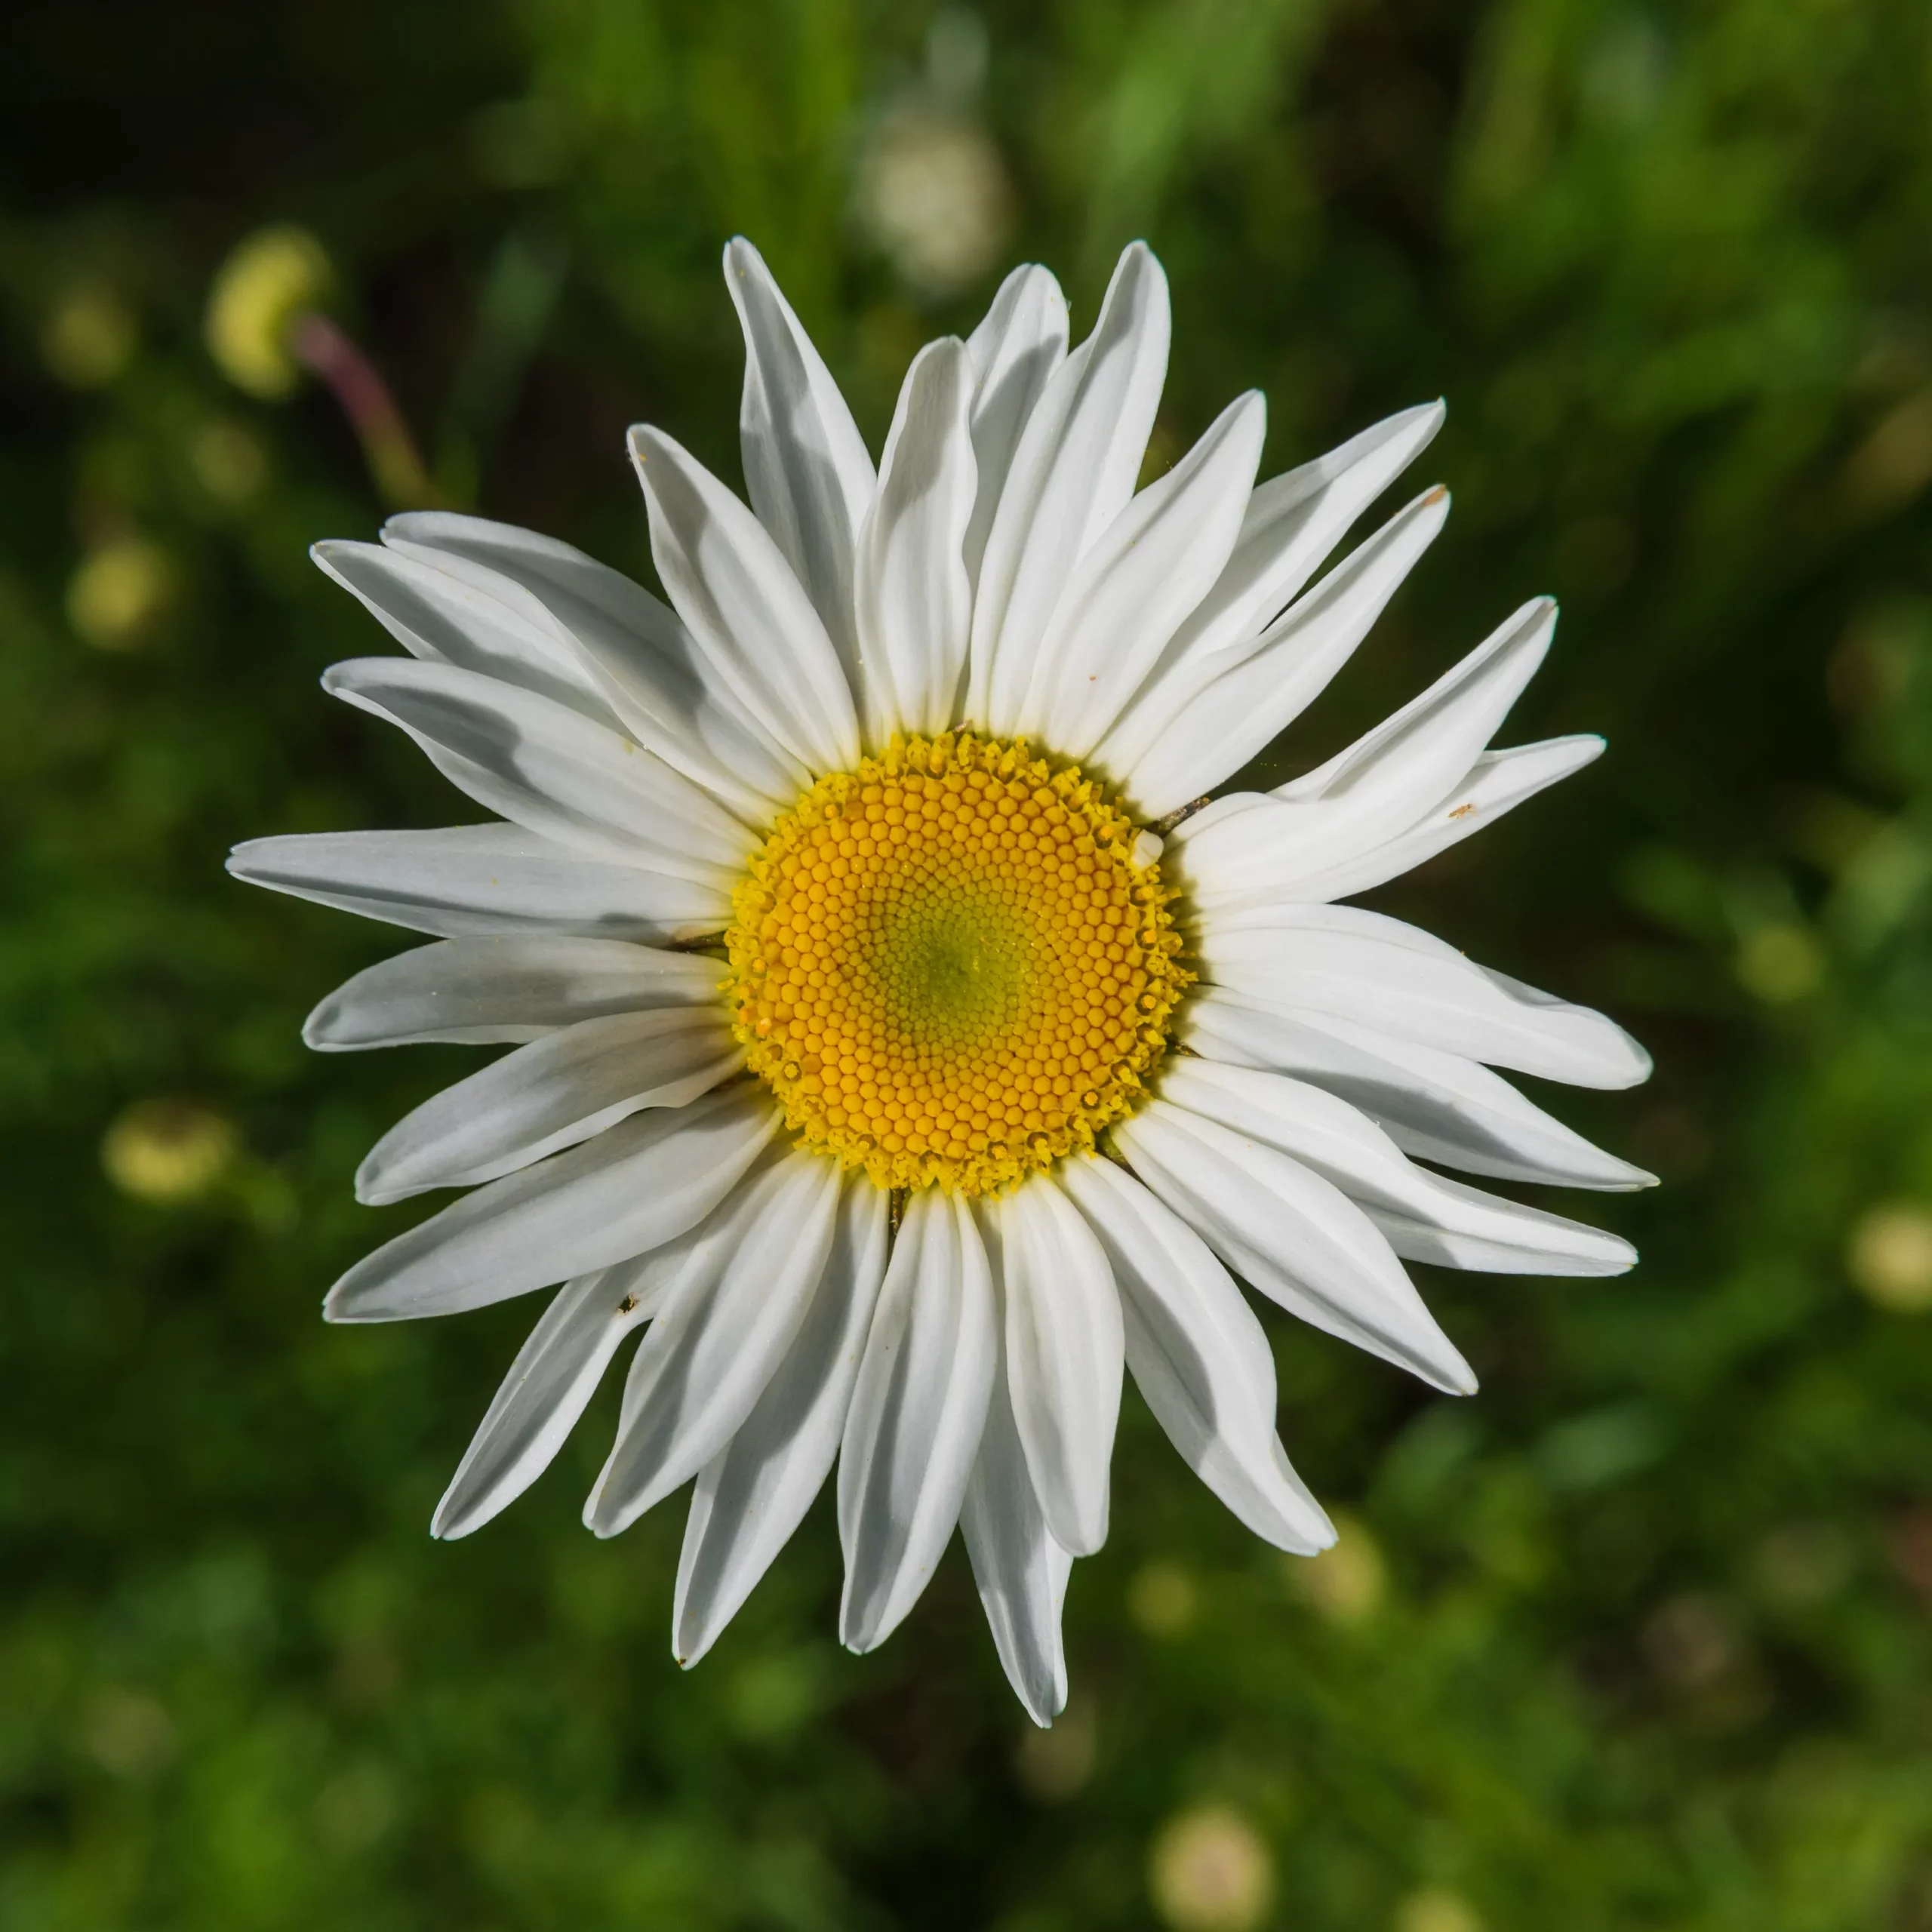 daisy closeup shot